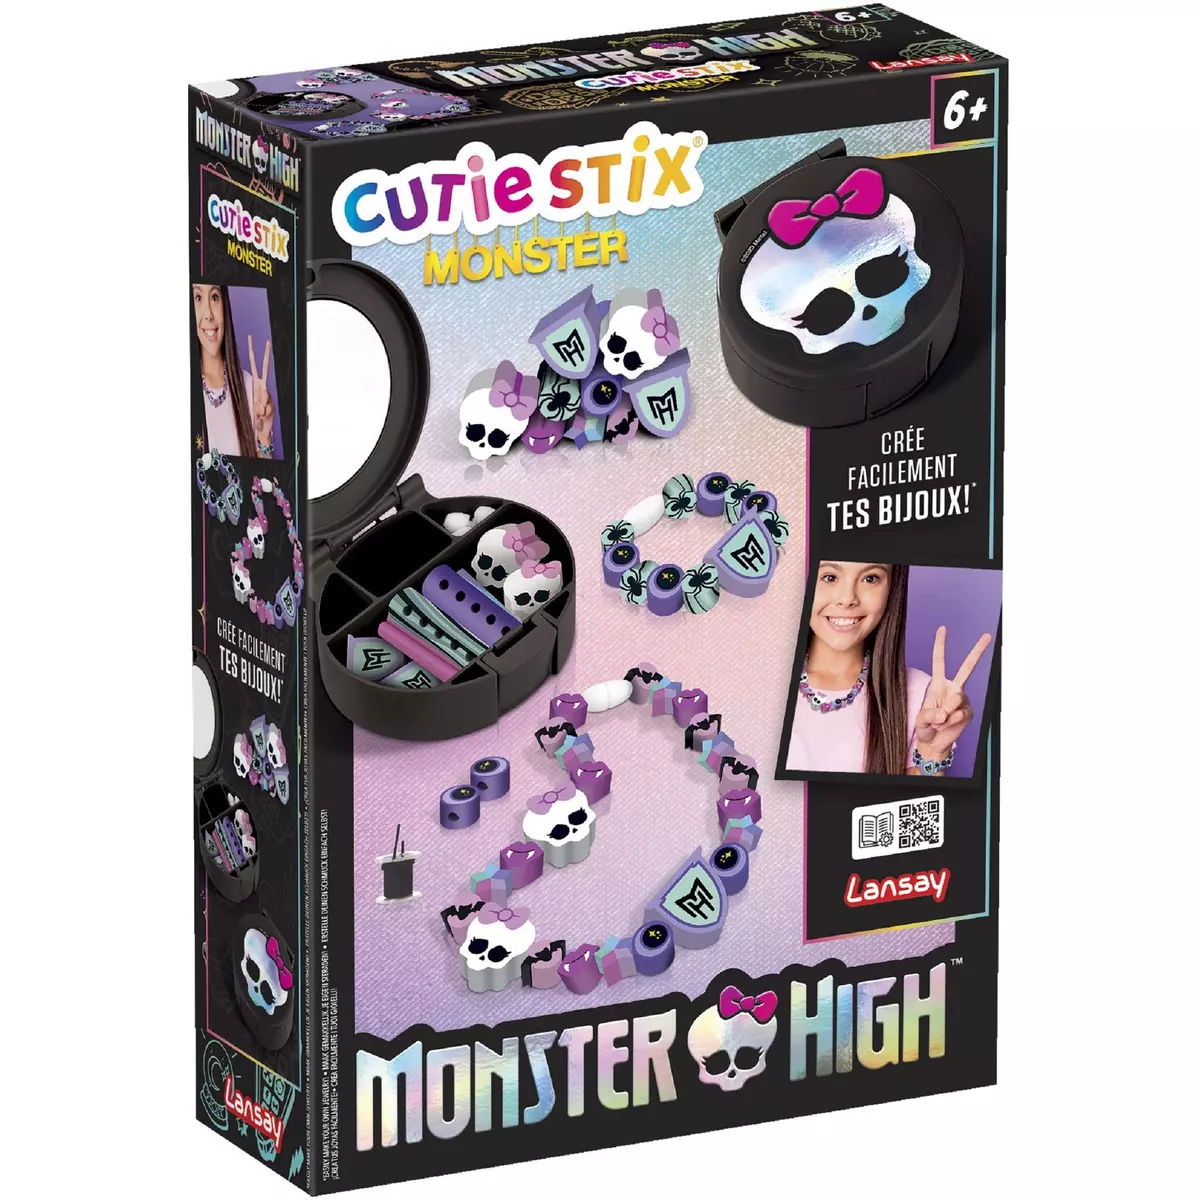 LANSAY Coffret Cutie Stix Monster High